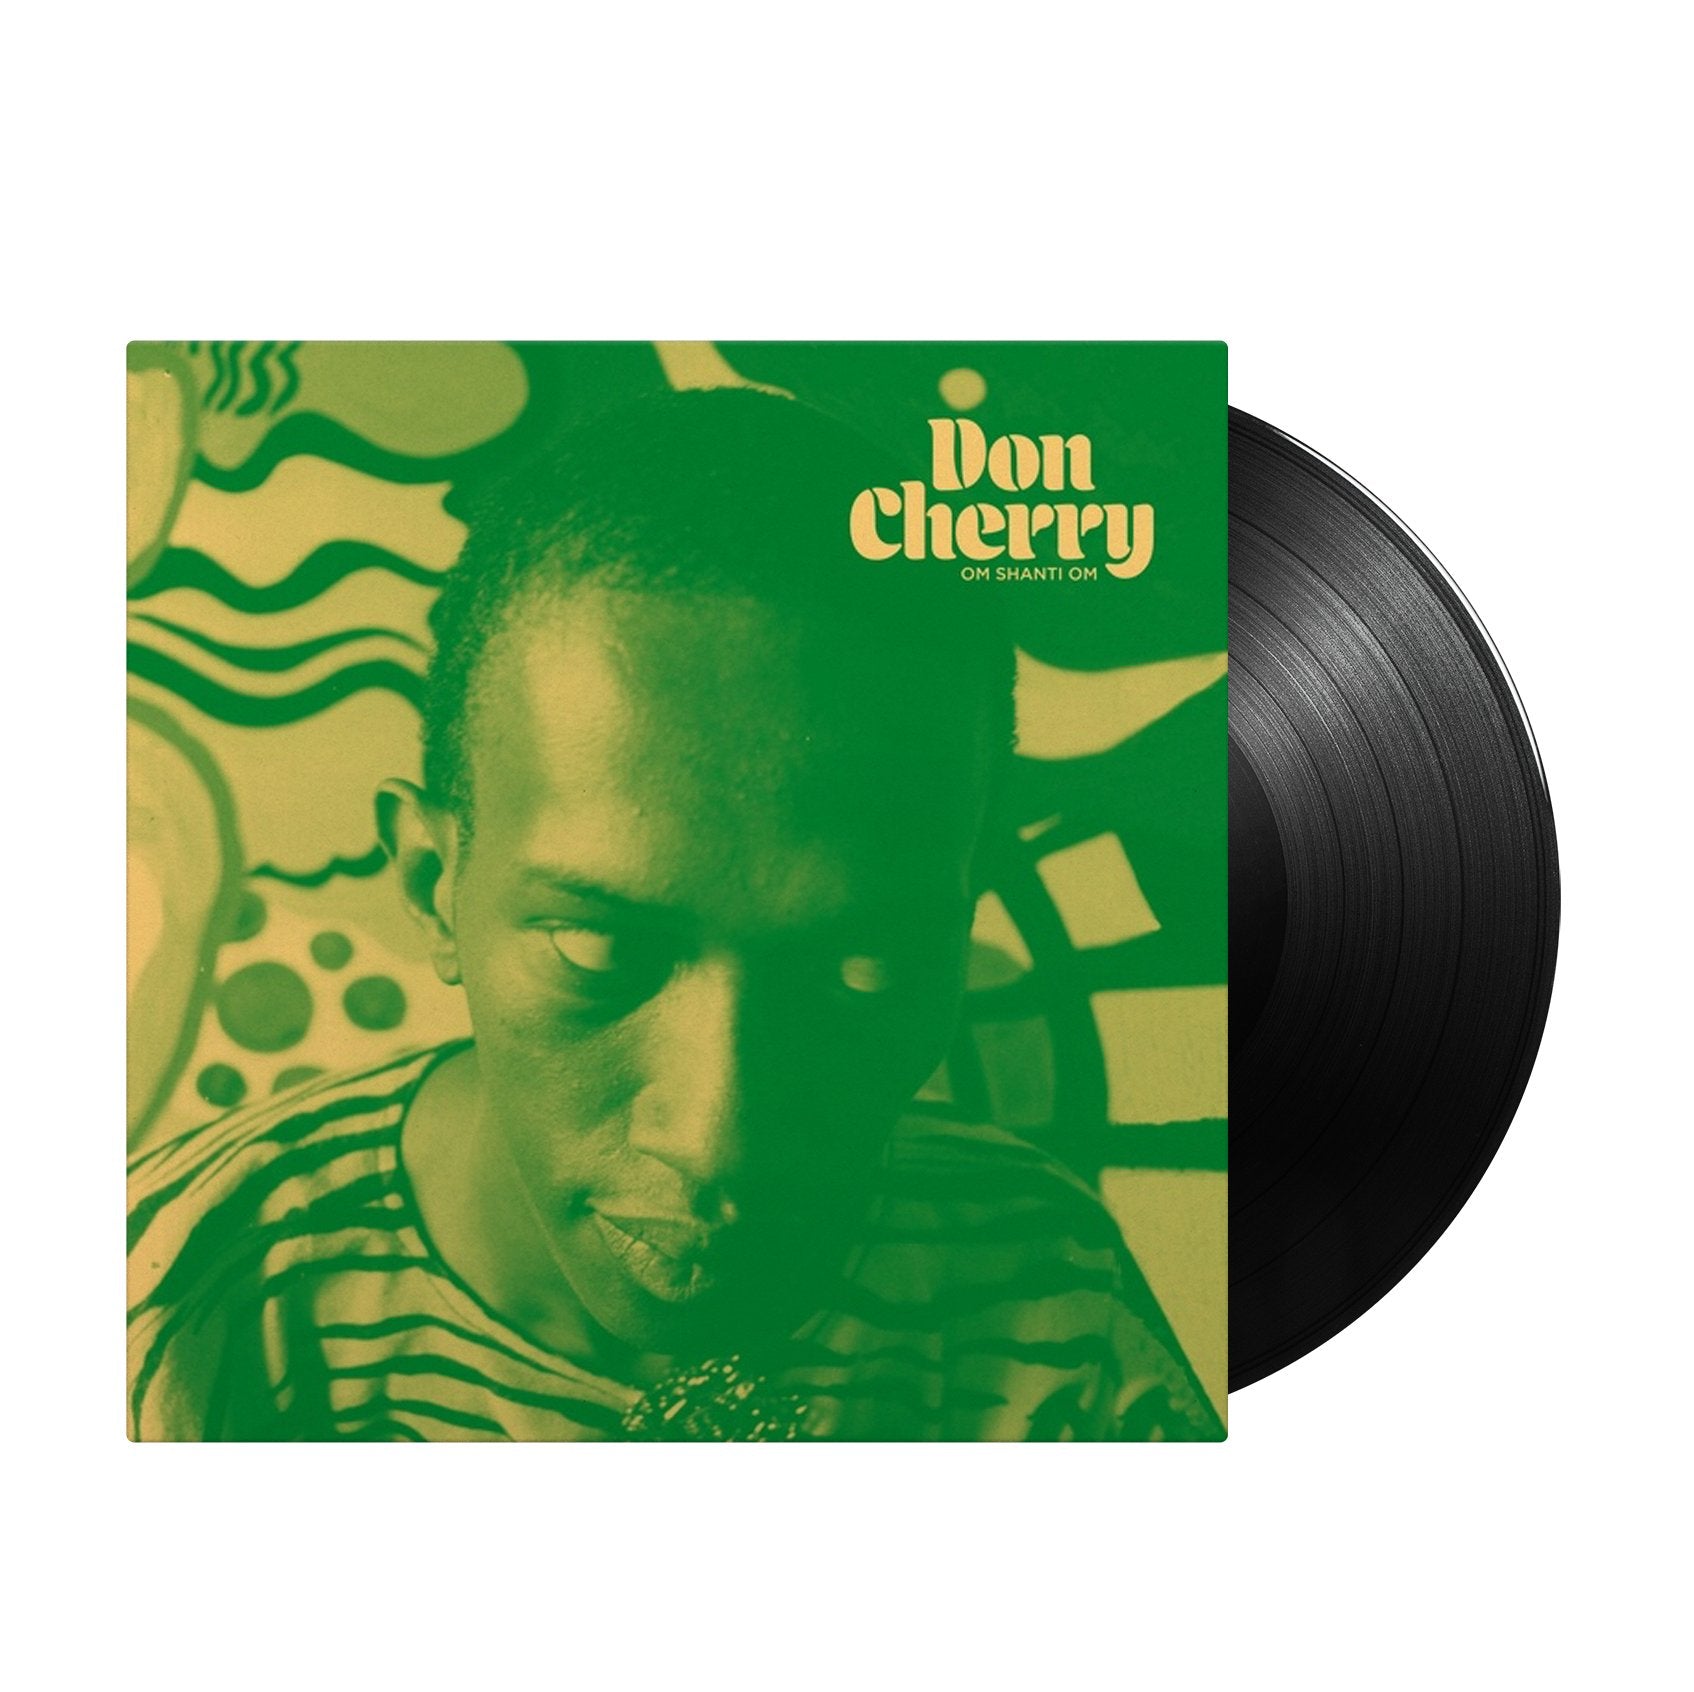 Don Cherry - Om Shanti Om - Inner Ocean Records